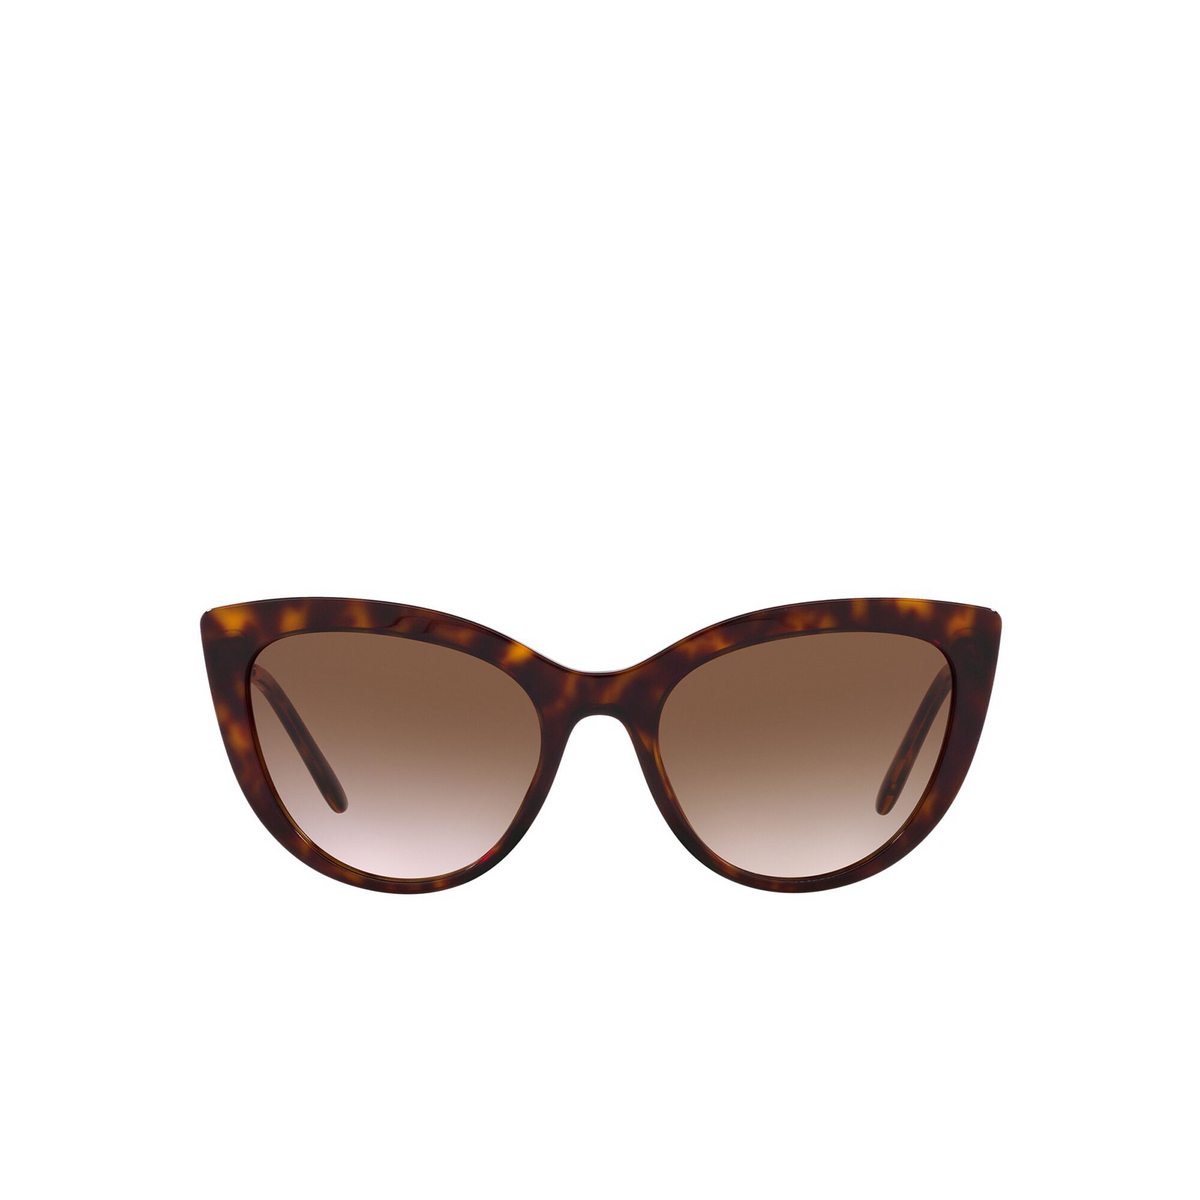 Dolce & Gabbana® Butterfly Sunglasses: DG4408 color Havana 502/13 - front view.